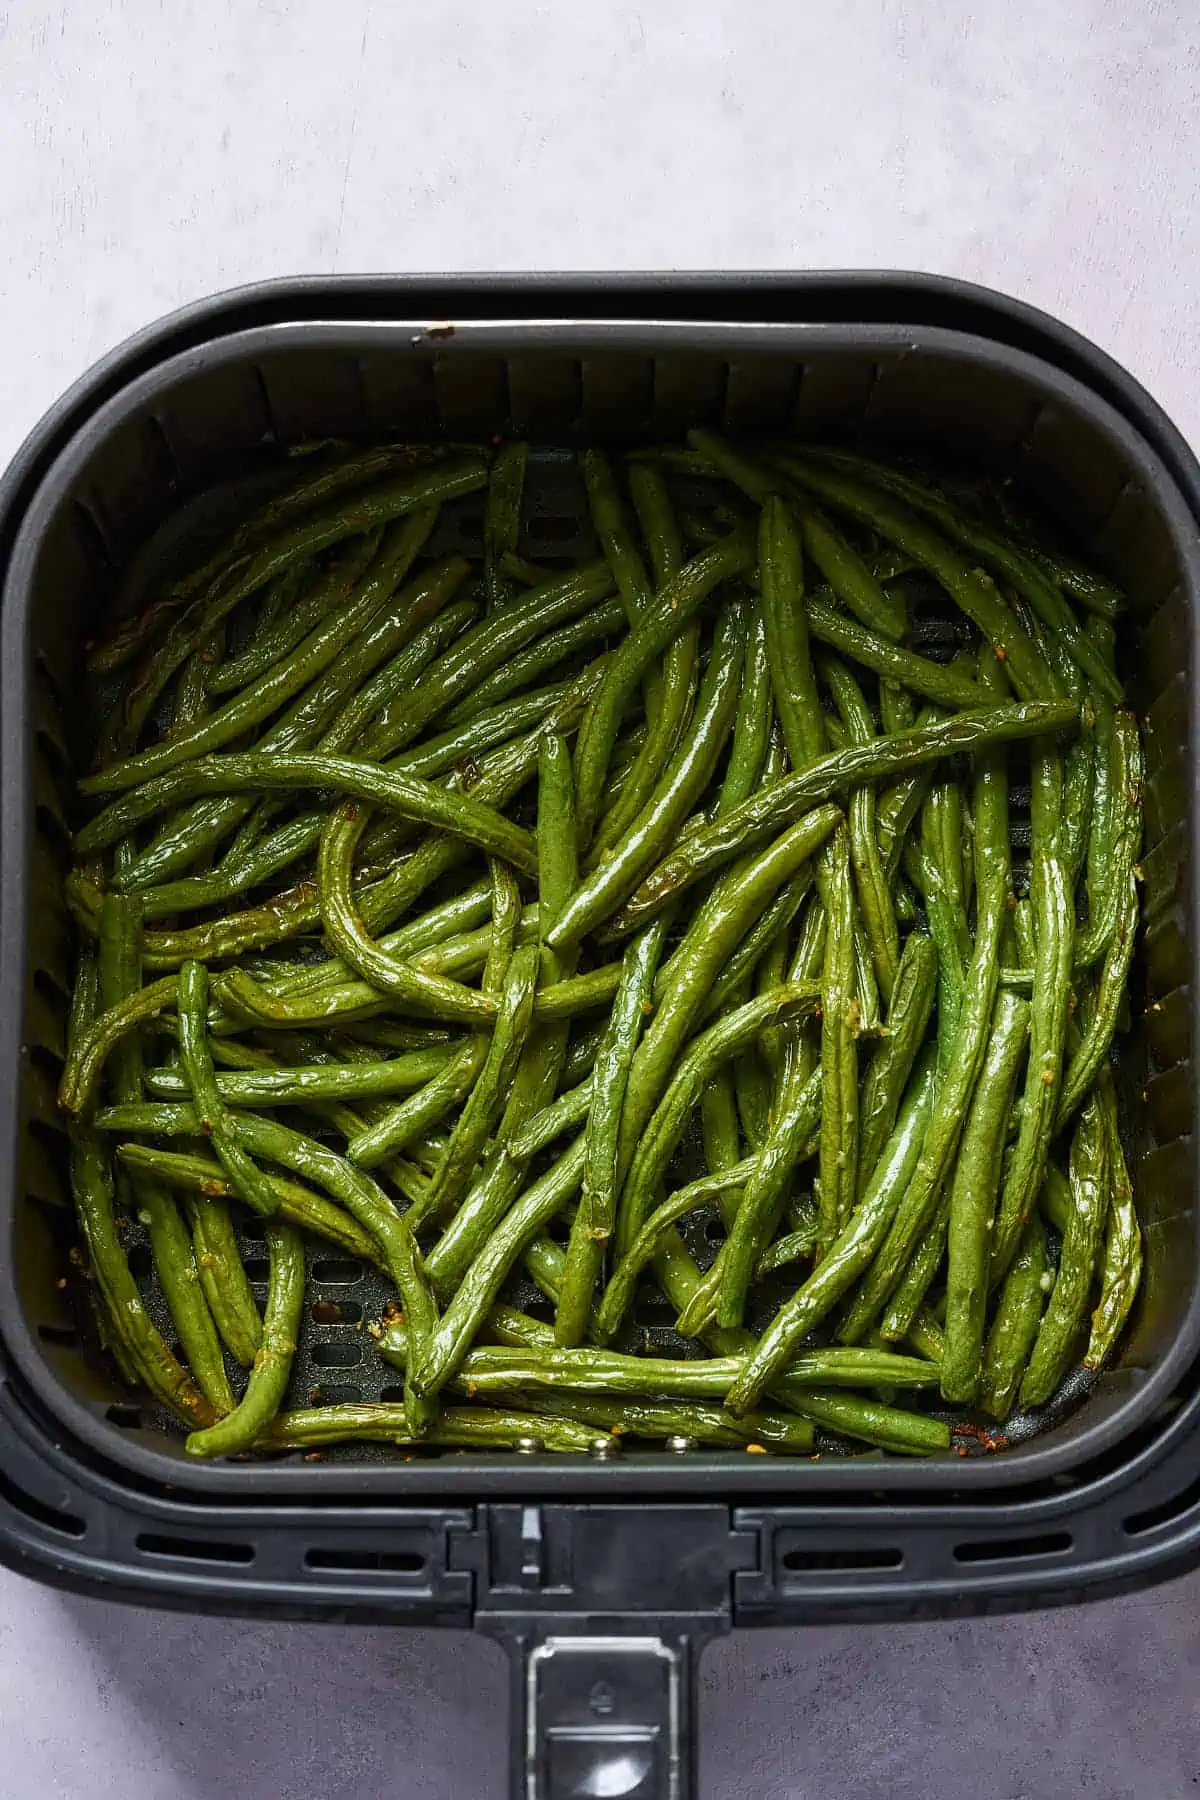 Air fried garlic green beans in the air fryer basket.